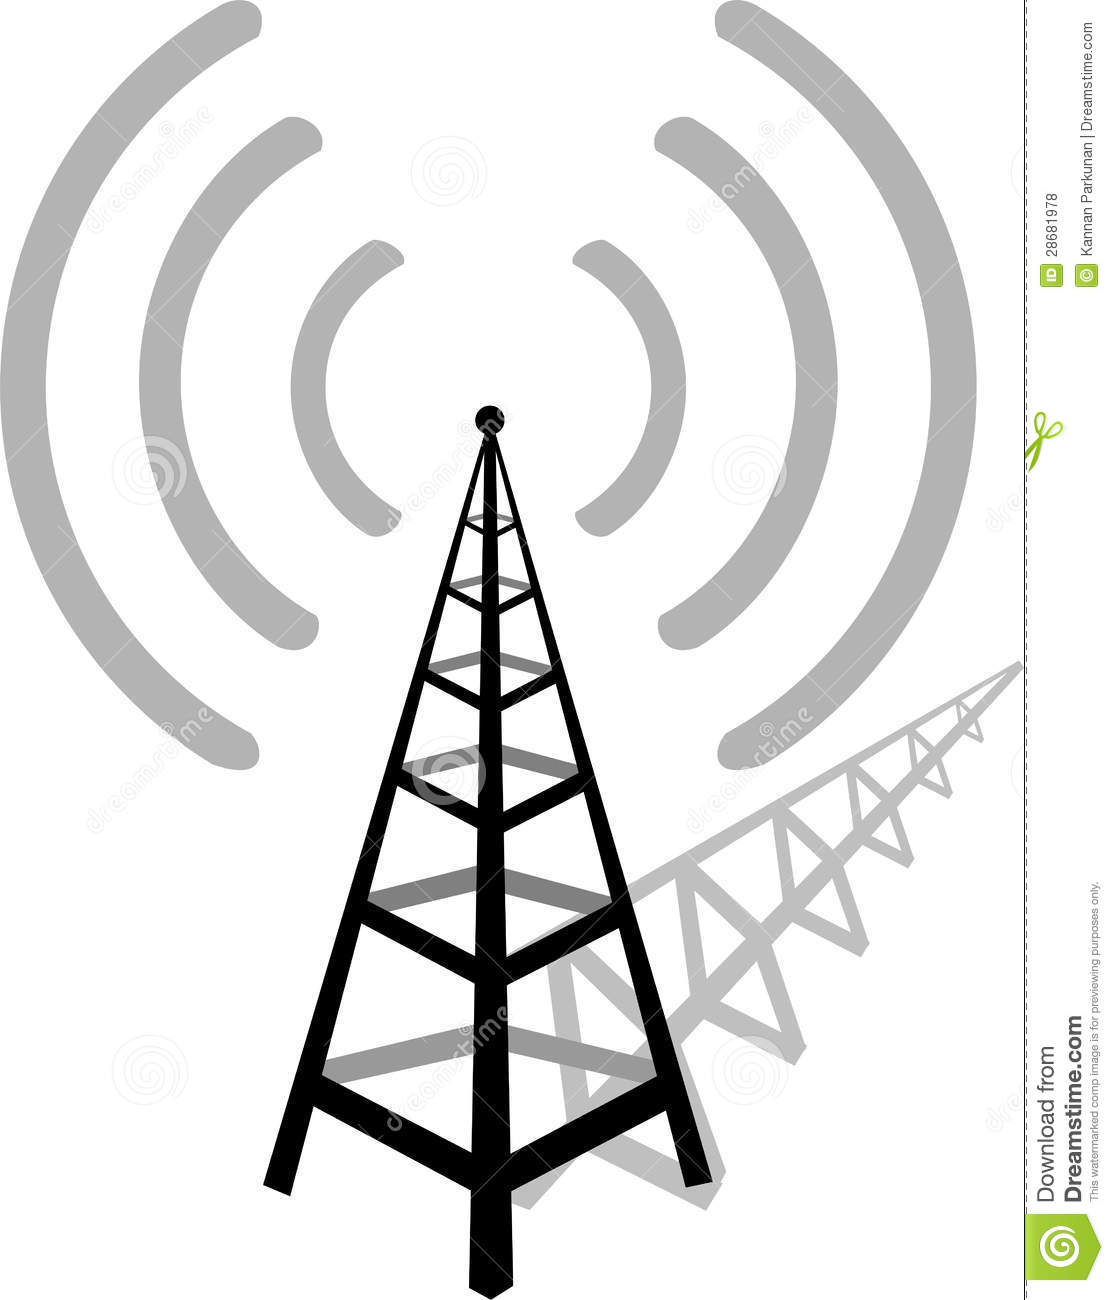 Wireless Communication Tower Royalty Free Stock Photos   Image